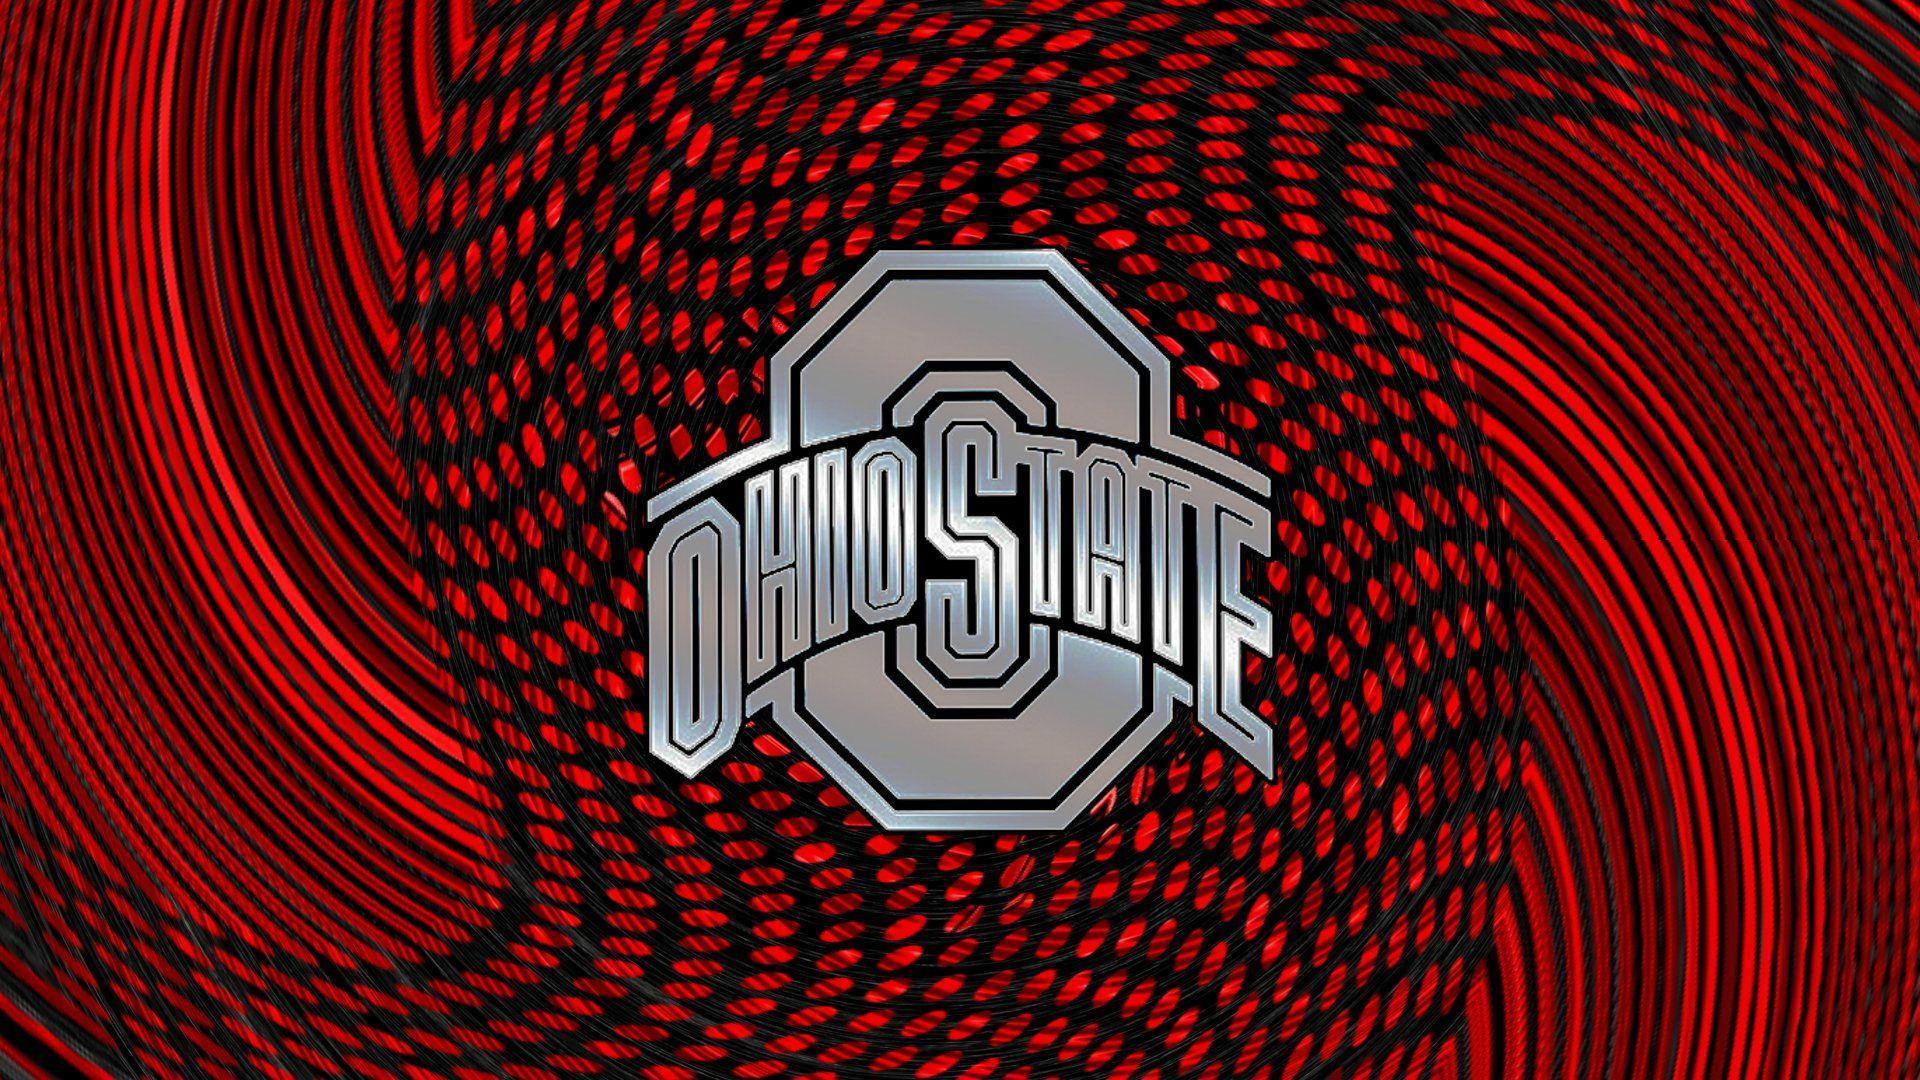 OSU Wallpaper Ohio State Football